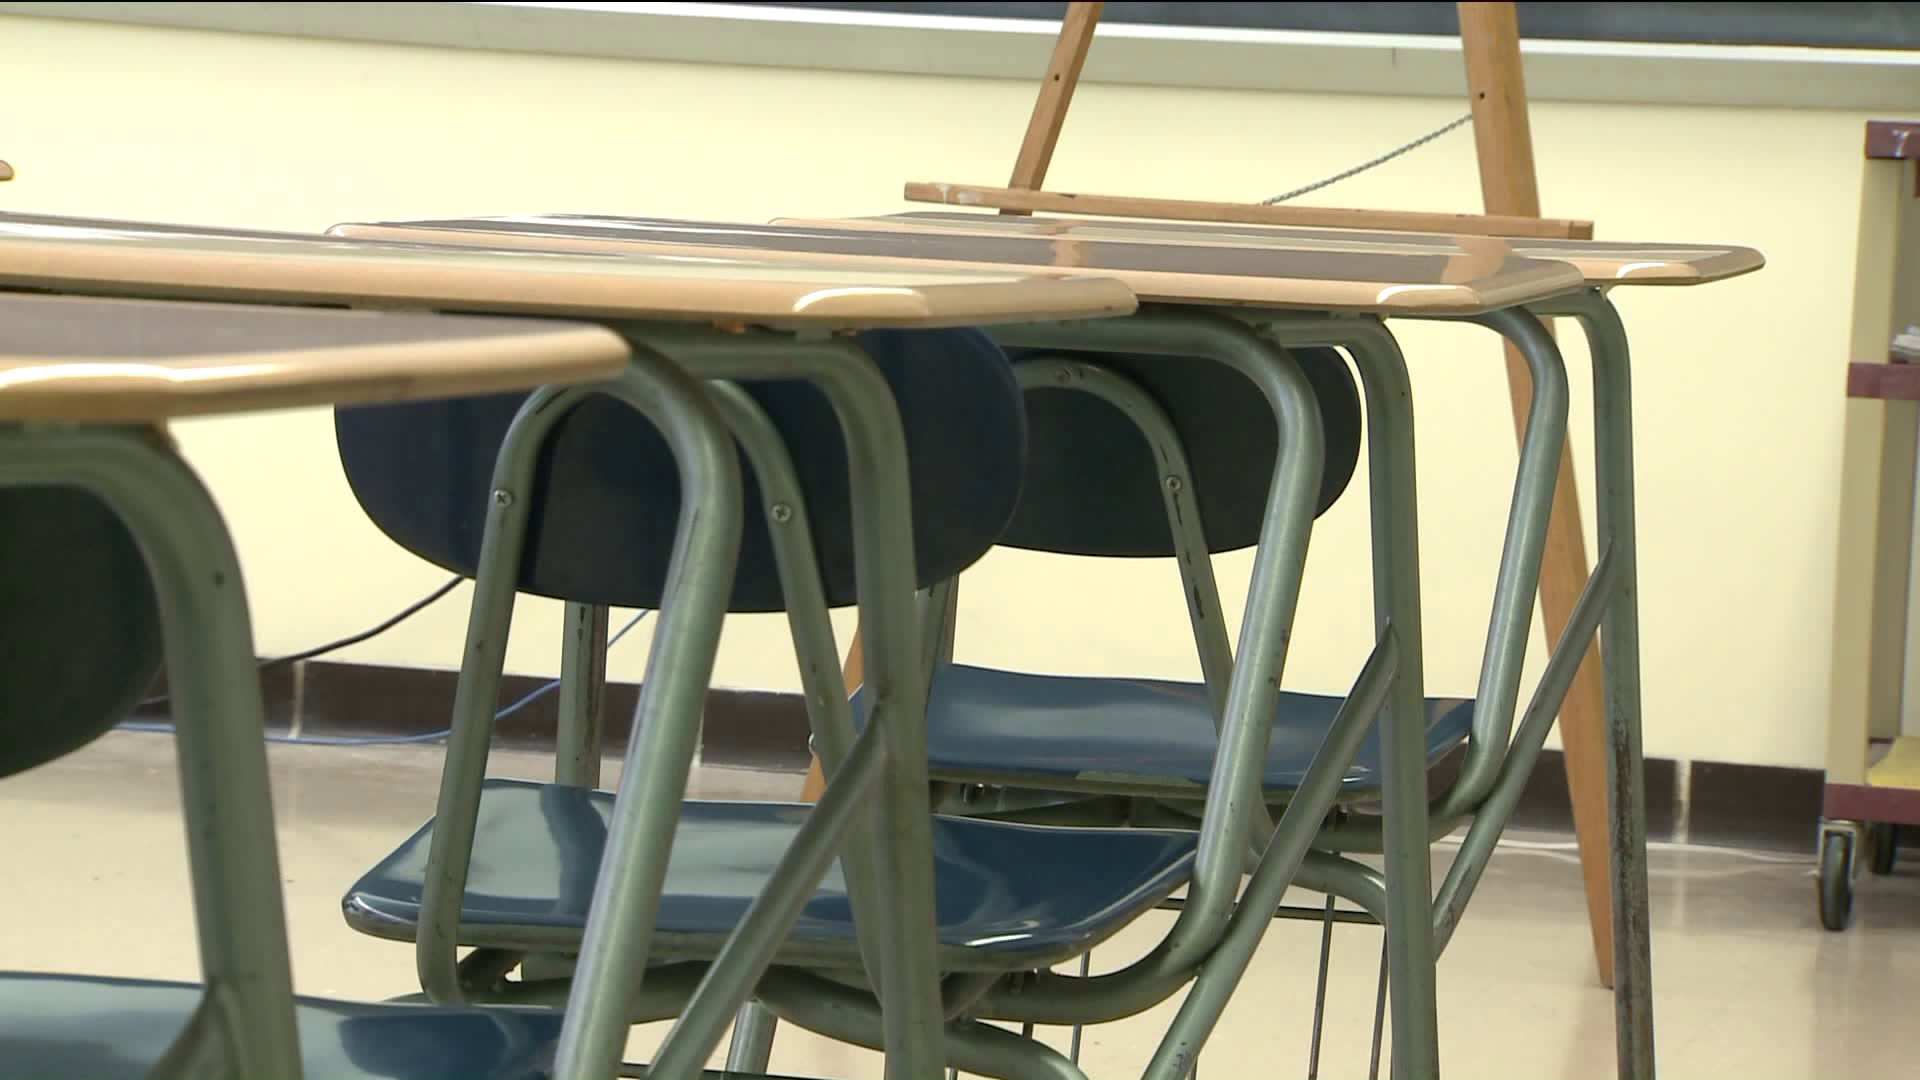 New report on Sexual assault in schools raises concern